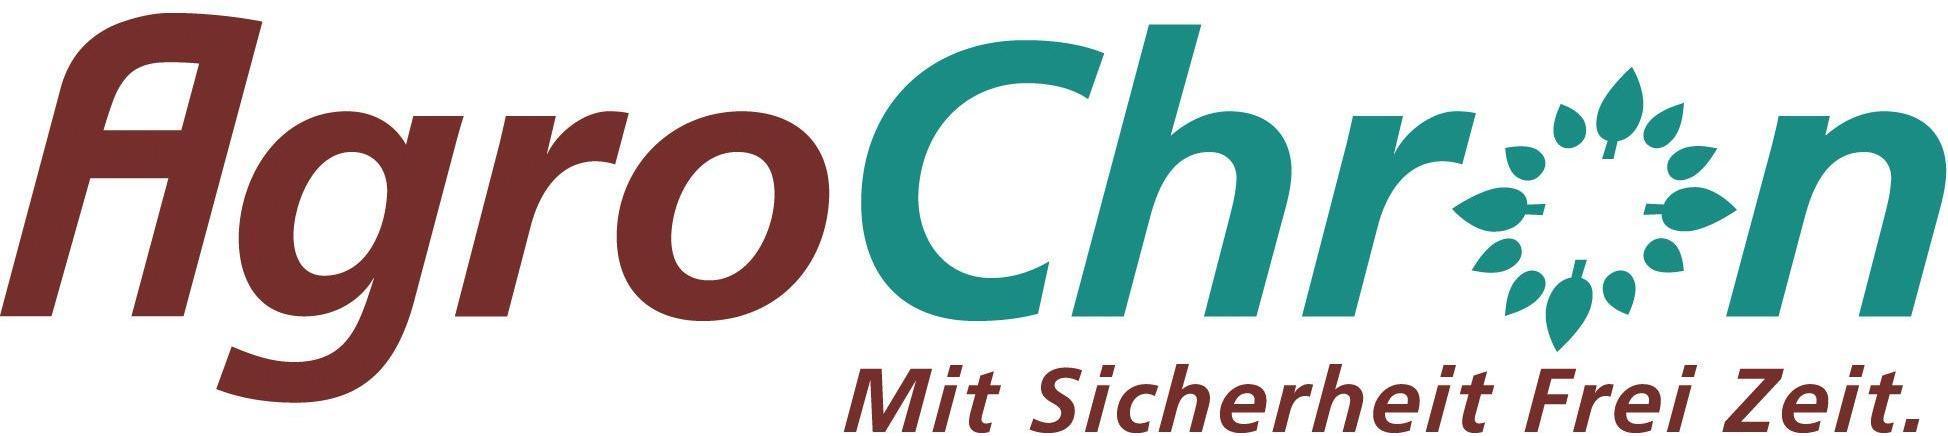 Logo Agrochron GmbH